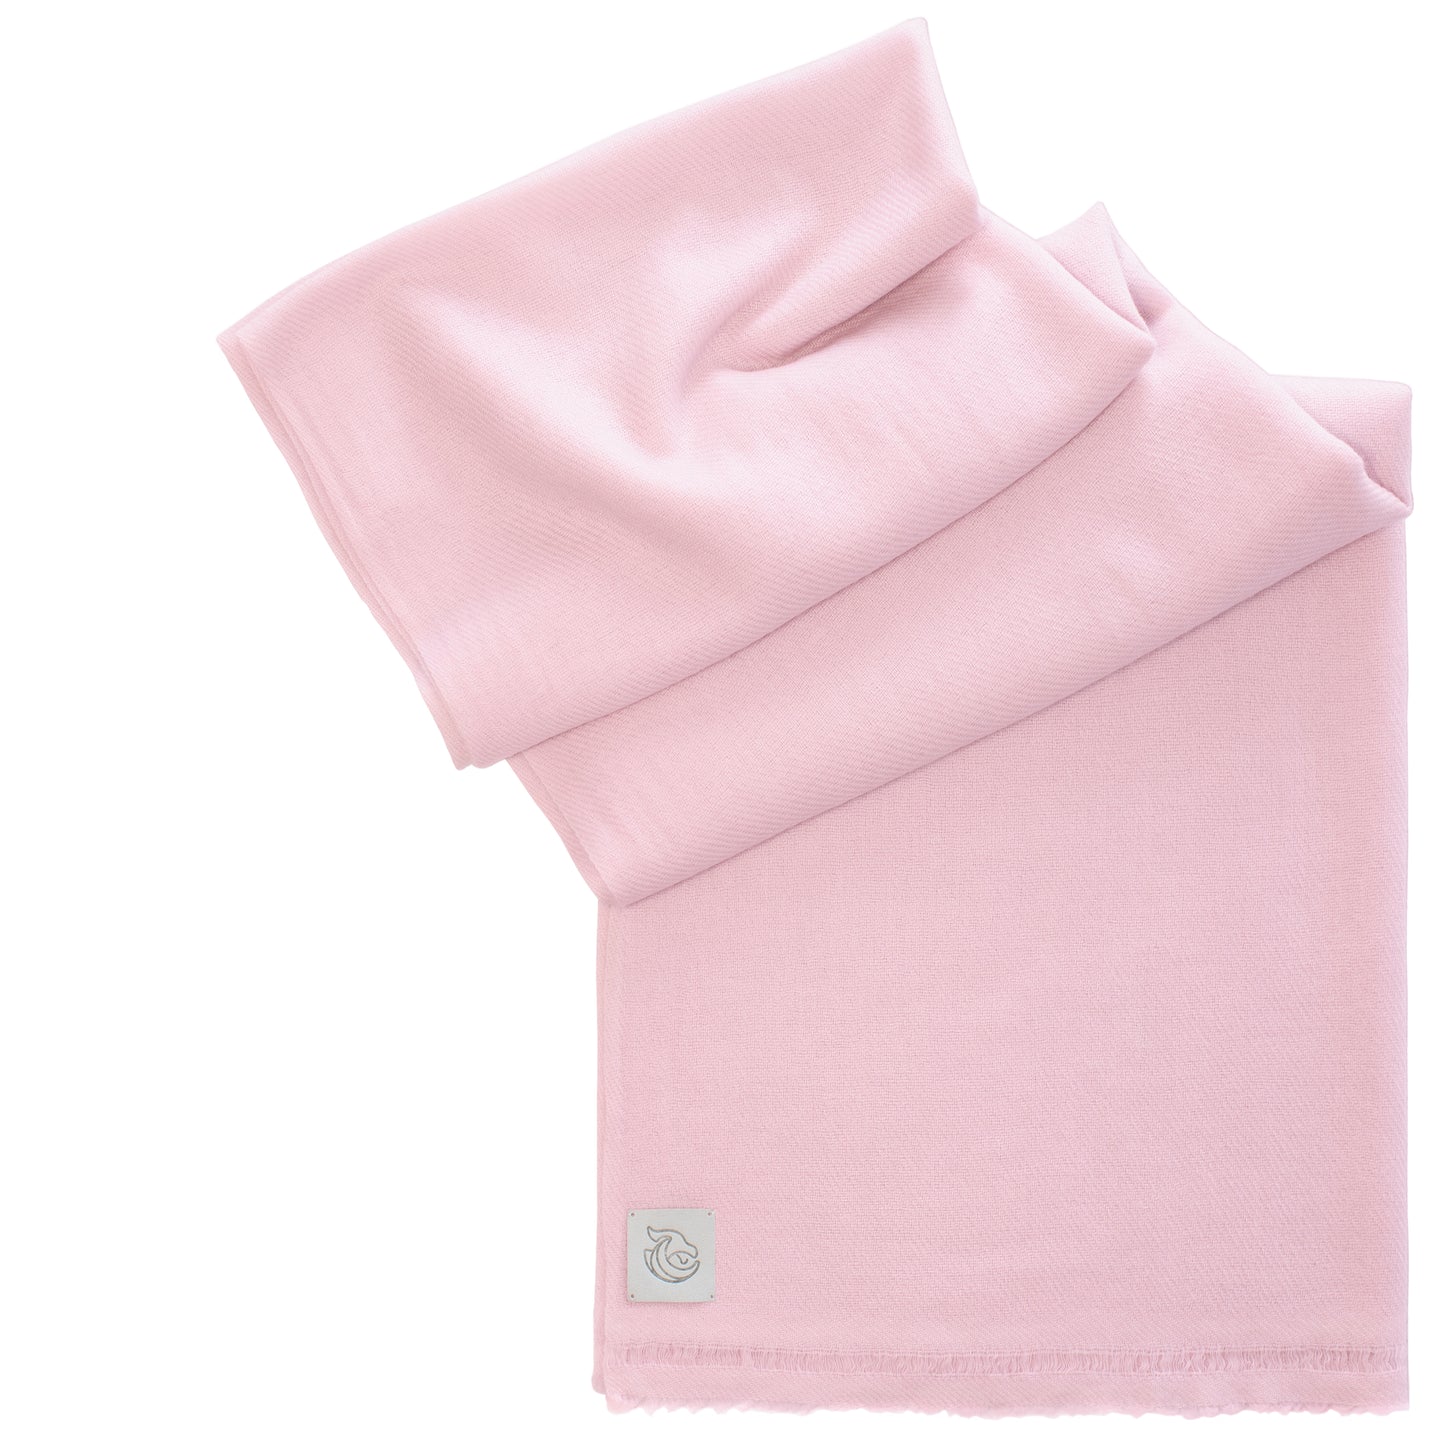 Cashmere woven shawl wrap pink